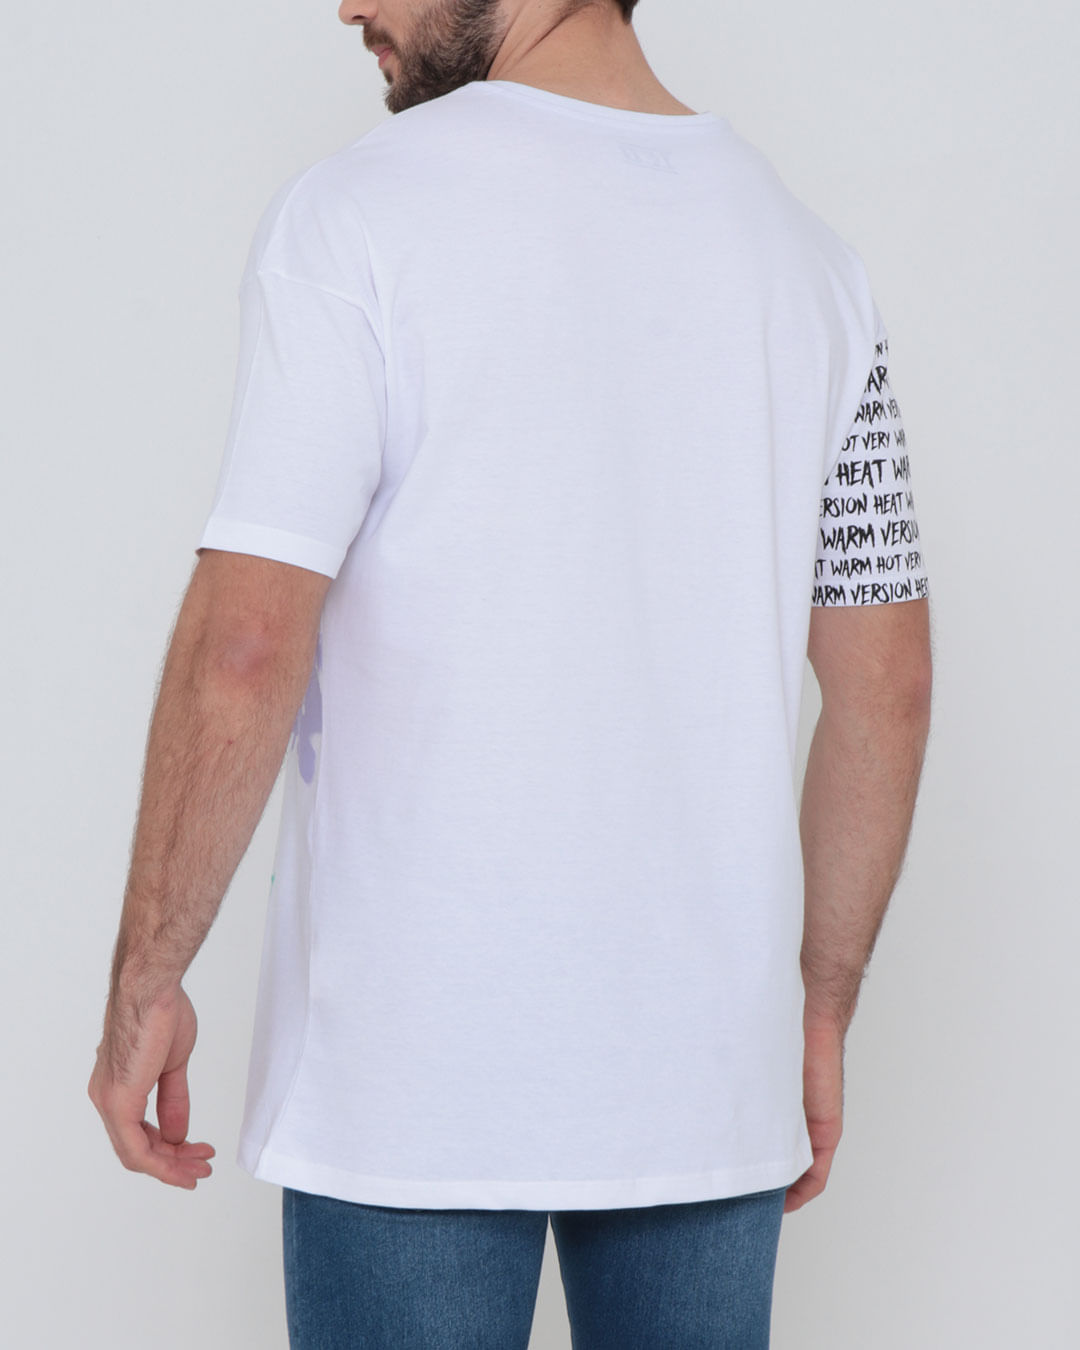 Camiseta-Masculina-Estampada-Urban-Branca